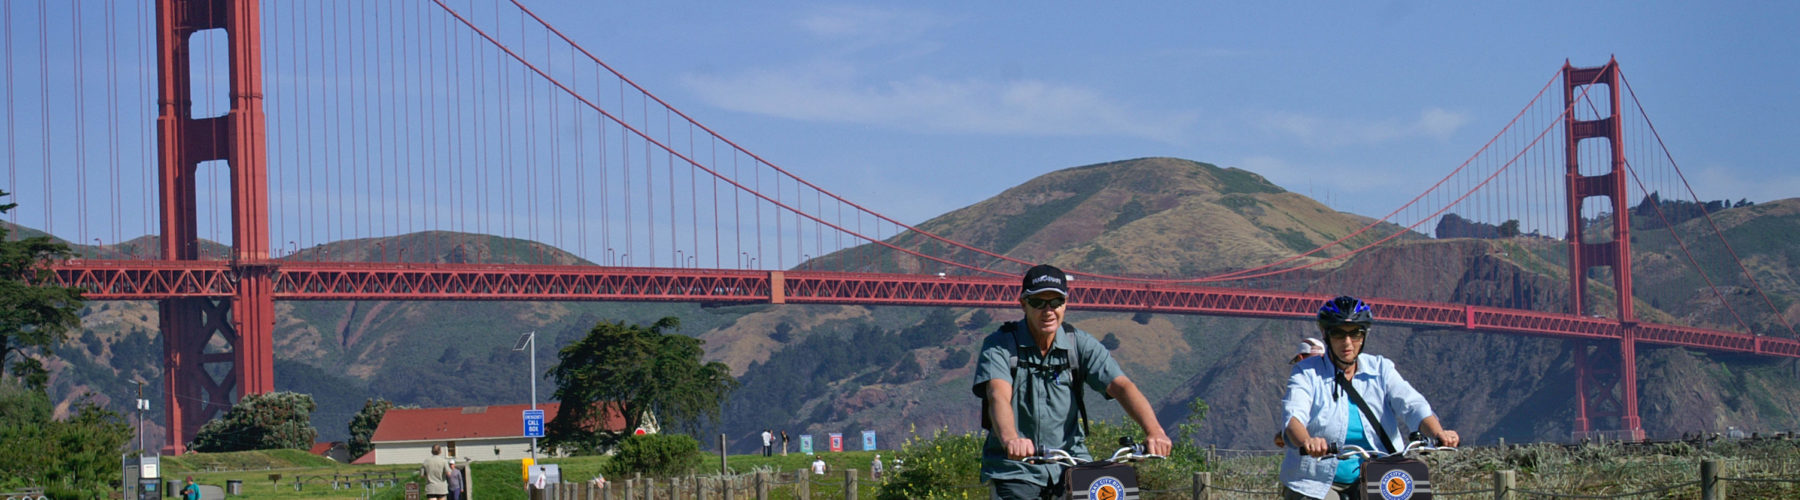 Passing the GG Bridge - San Francisco - Bay City Bike